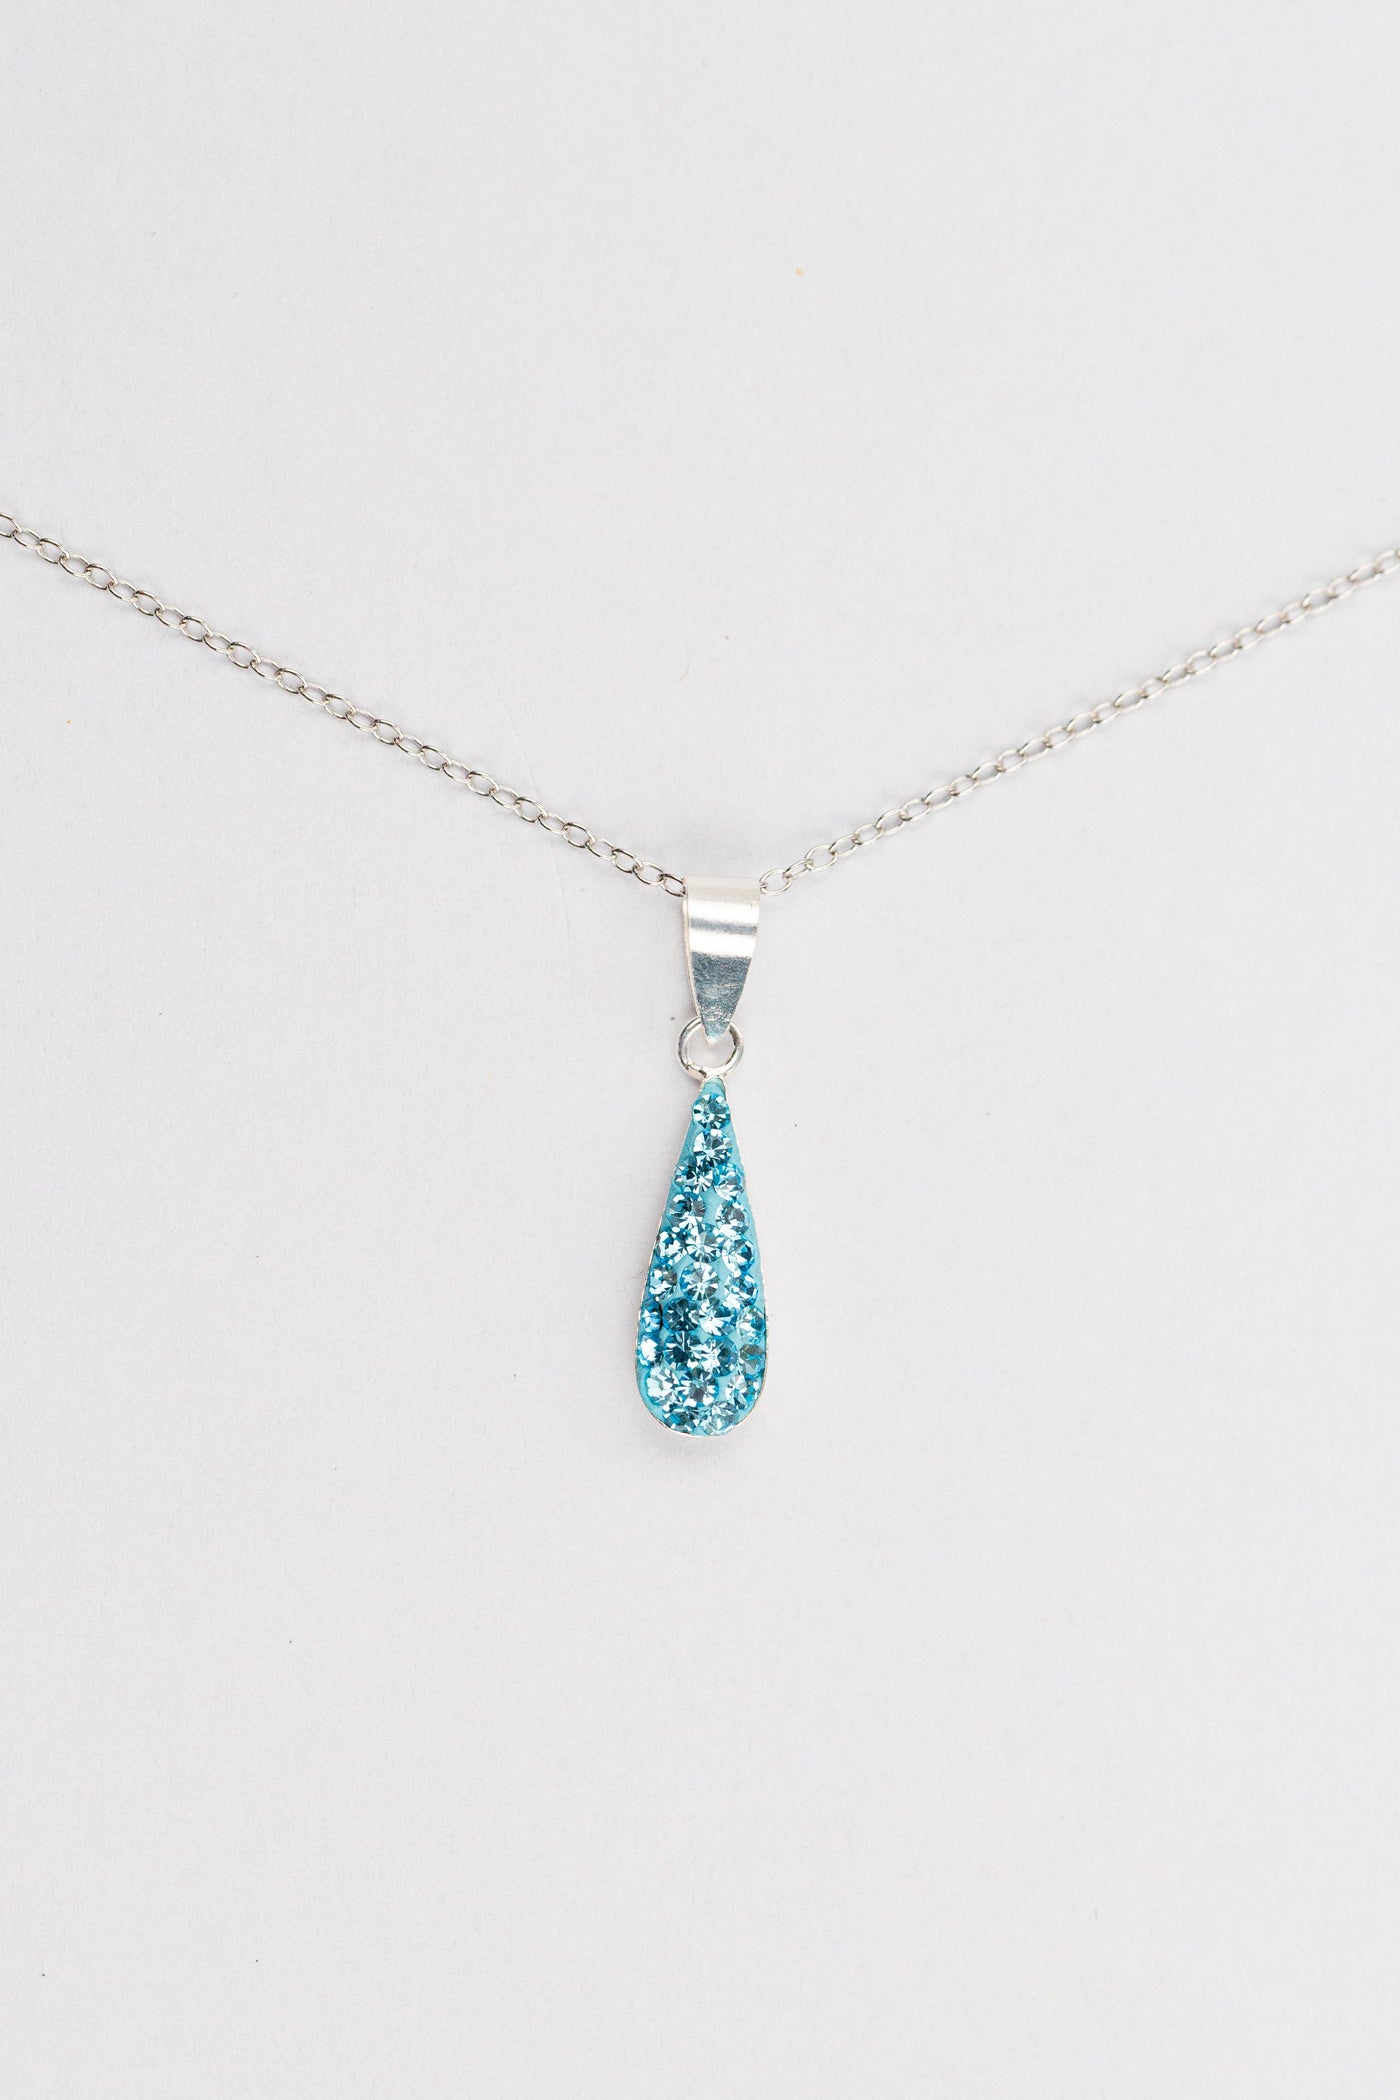 Swarovski Crystal Teardrop Silver Necklace in Aquamarine | Annie and Sisters